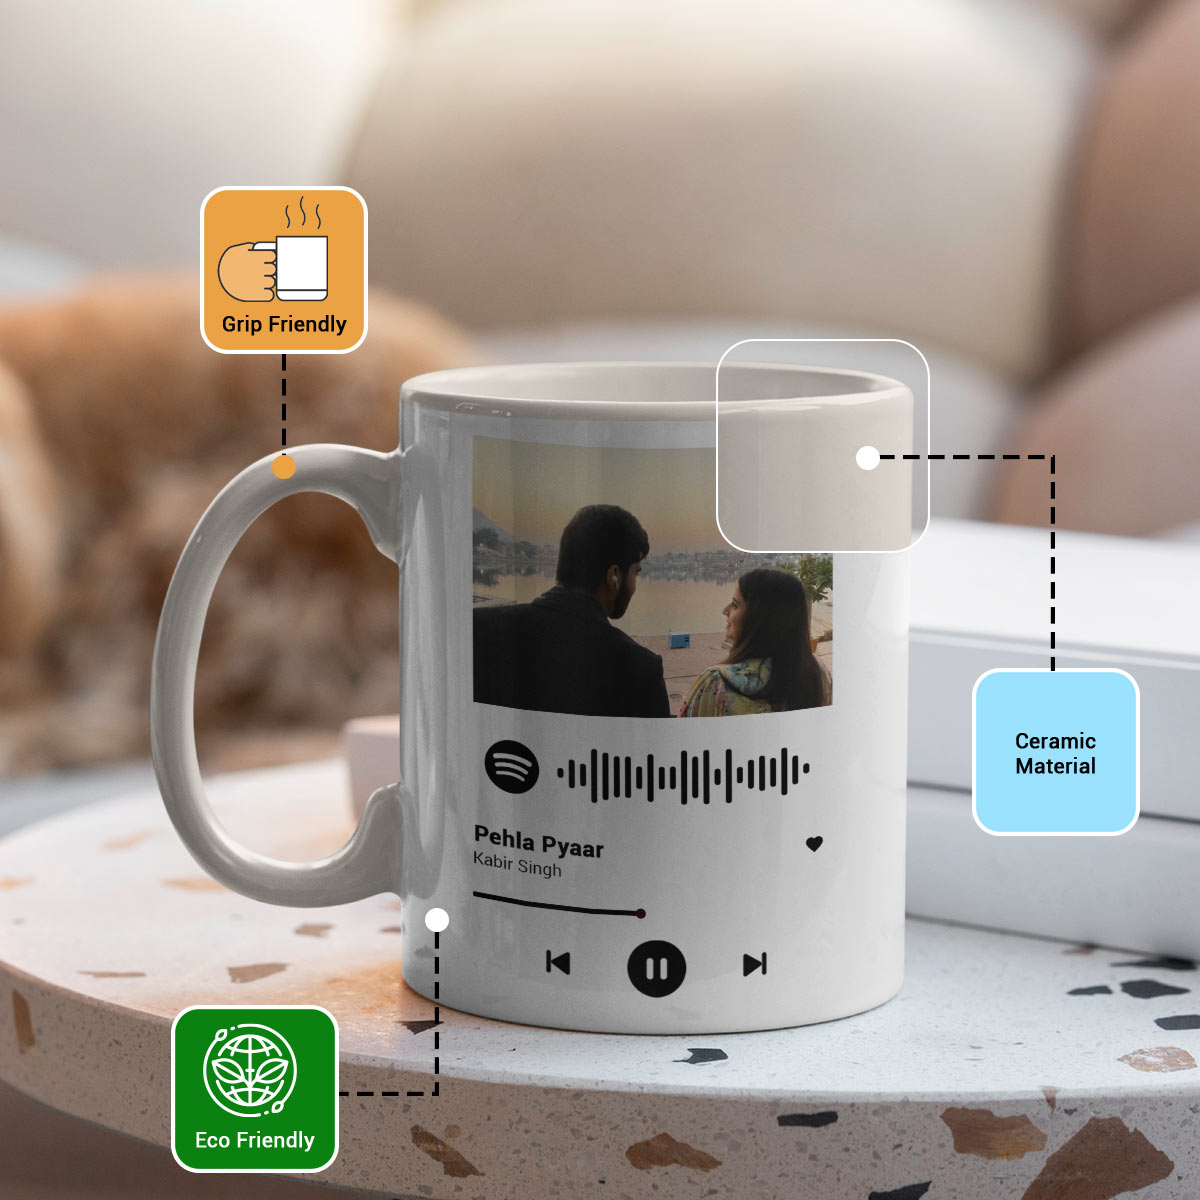 Personalised Spotify Coffee Mug